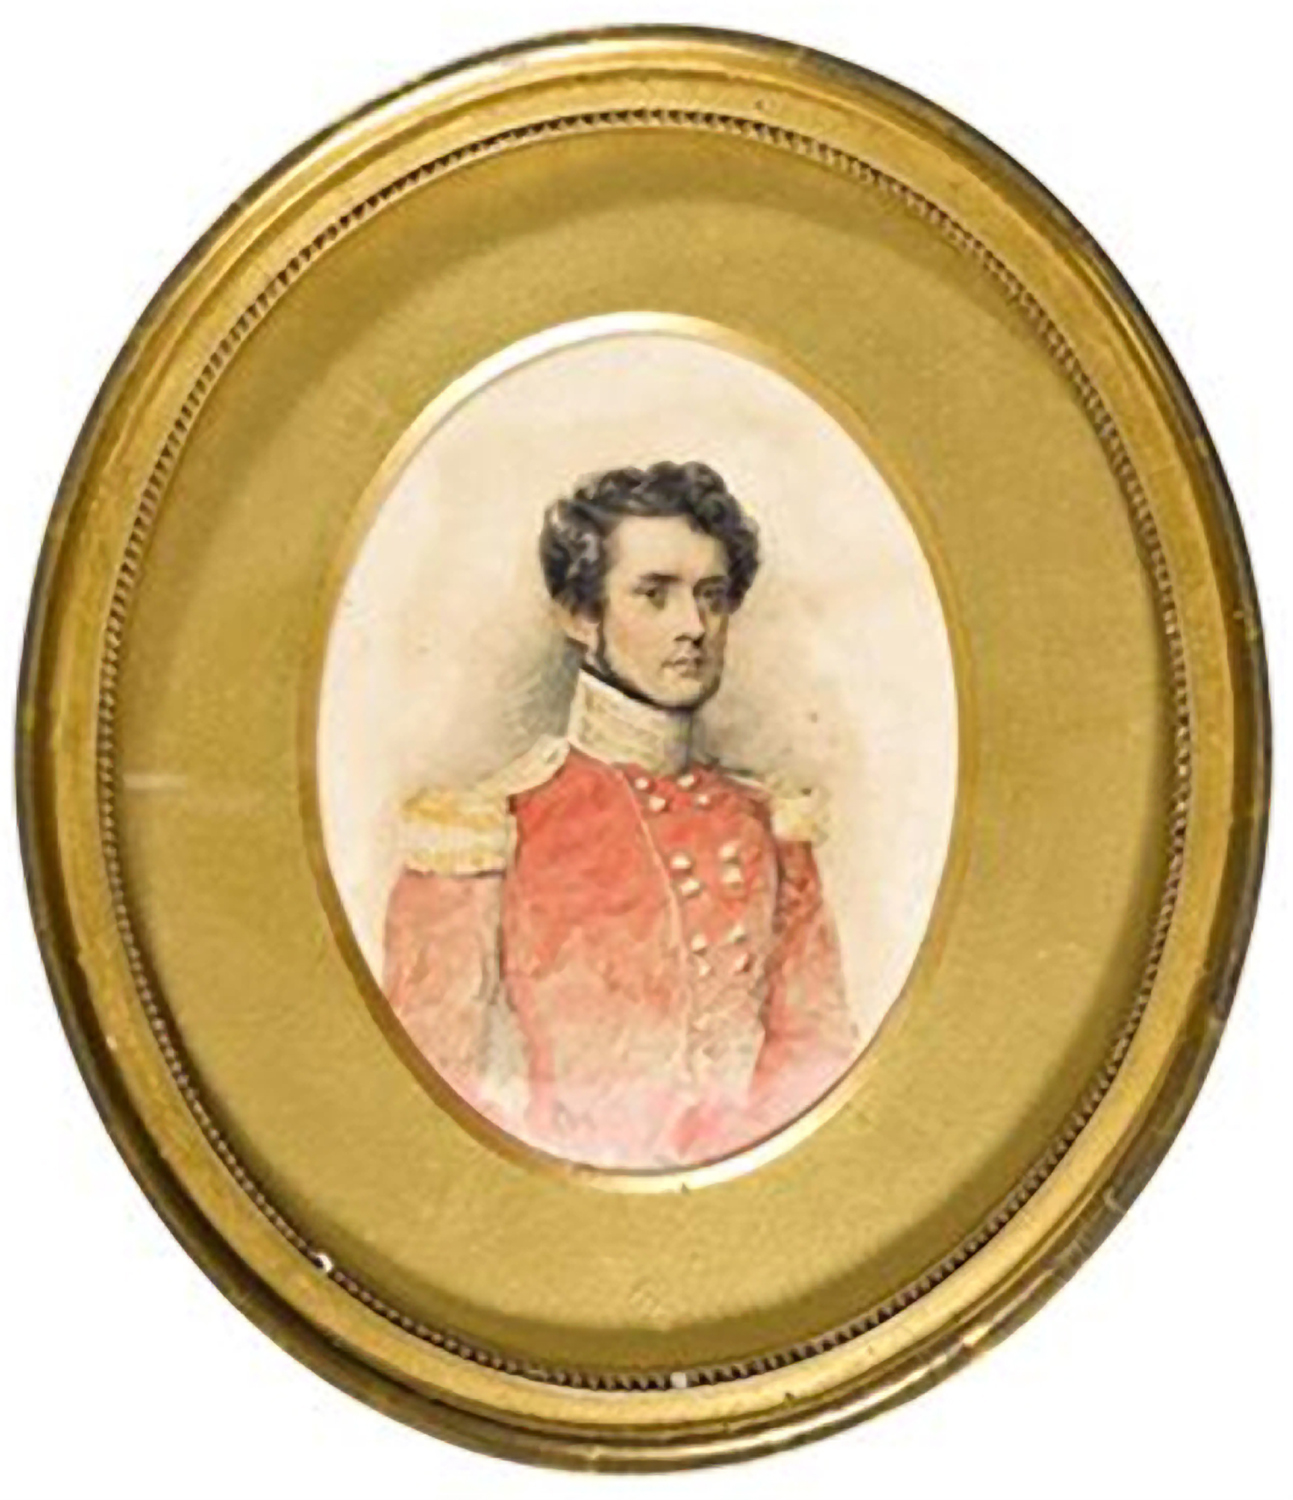 Captain Alexander McCrae, 84th Regiment